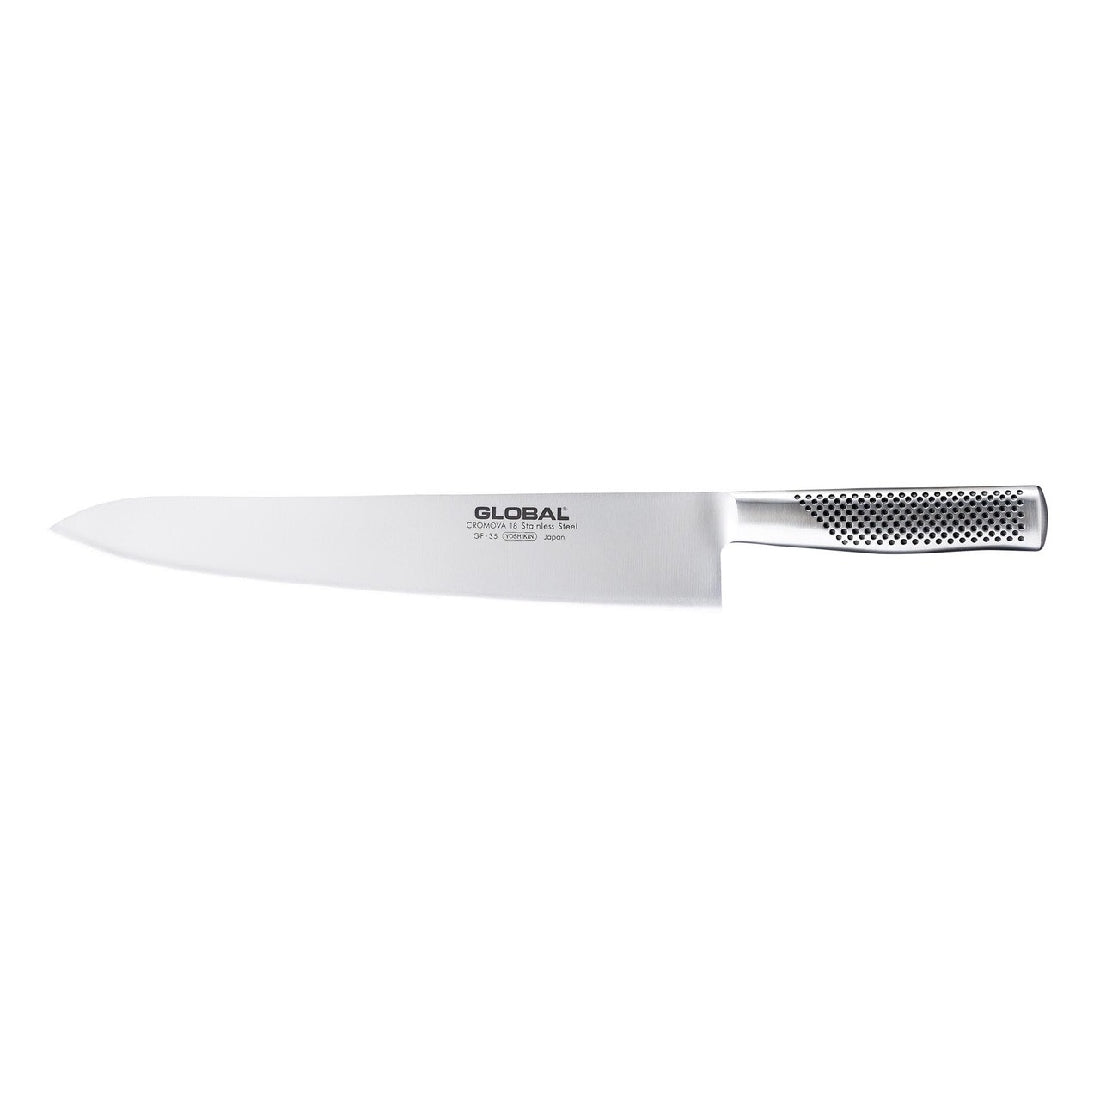 Global Classic 30cm Chefs Knife Gf-35